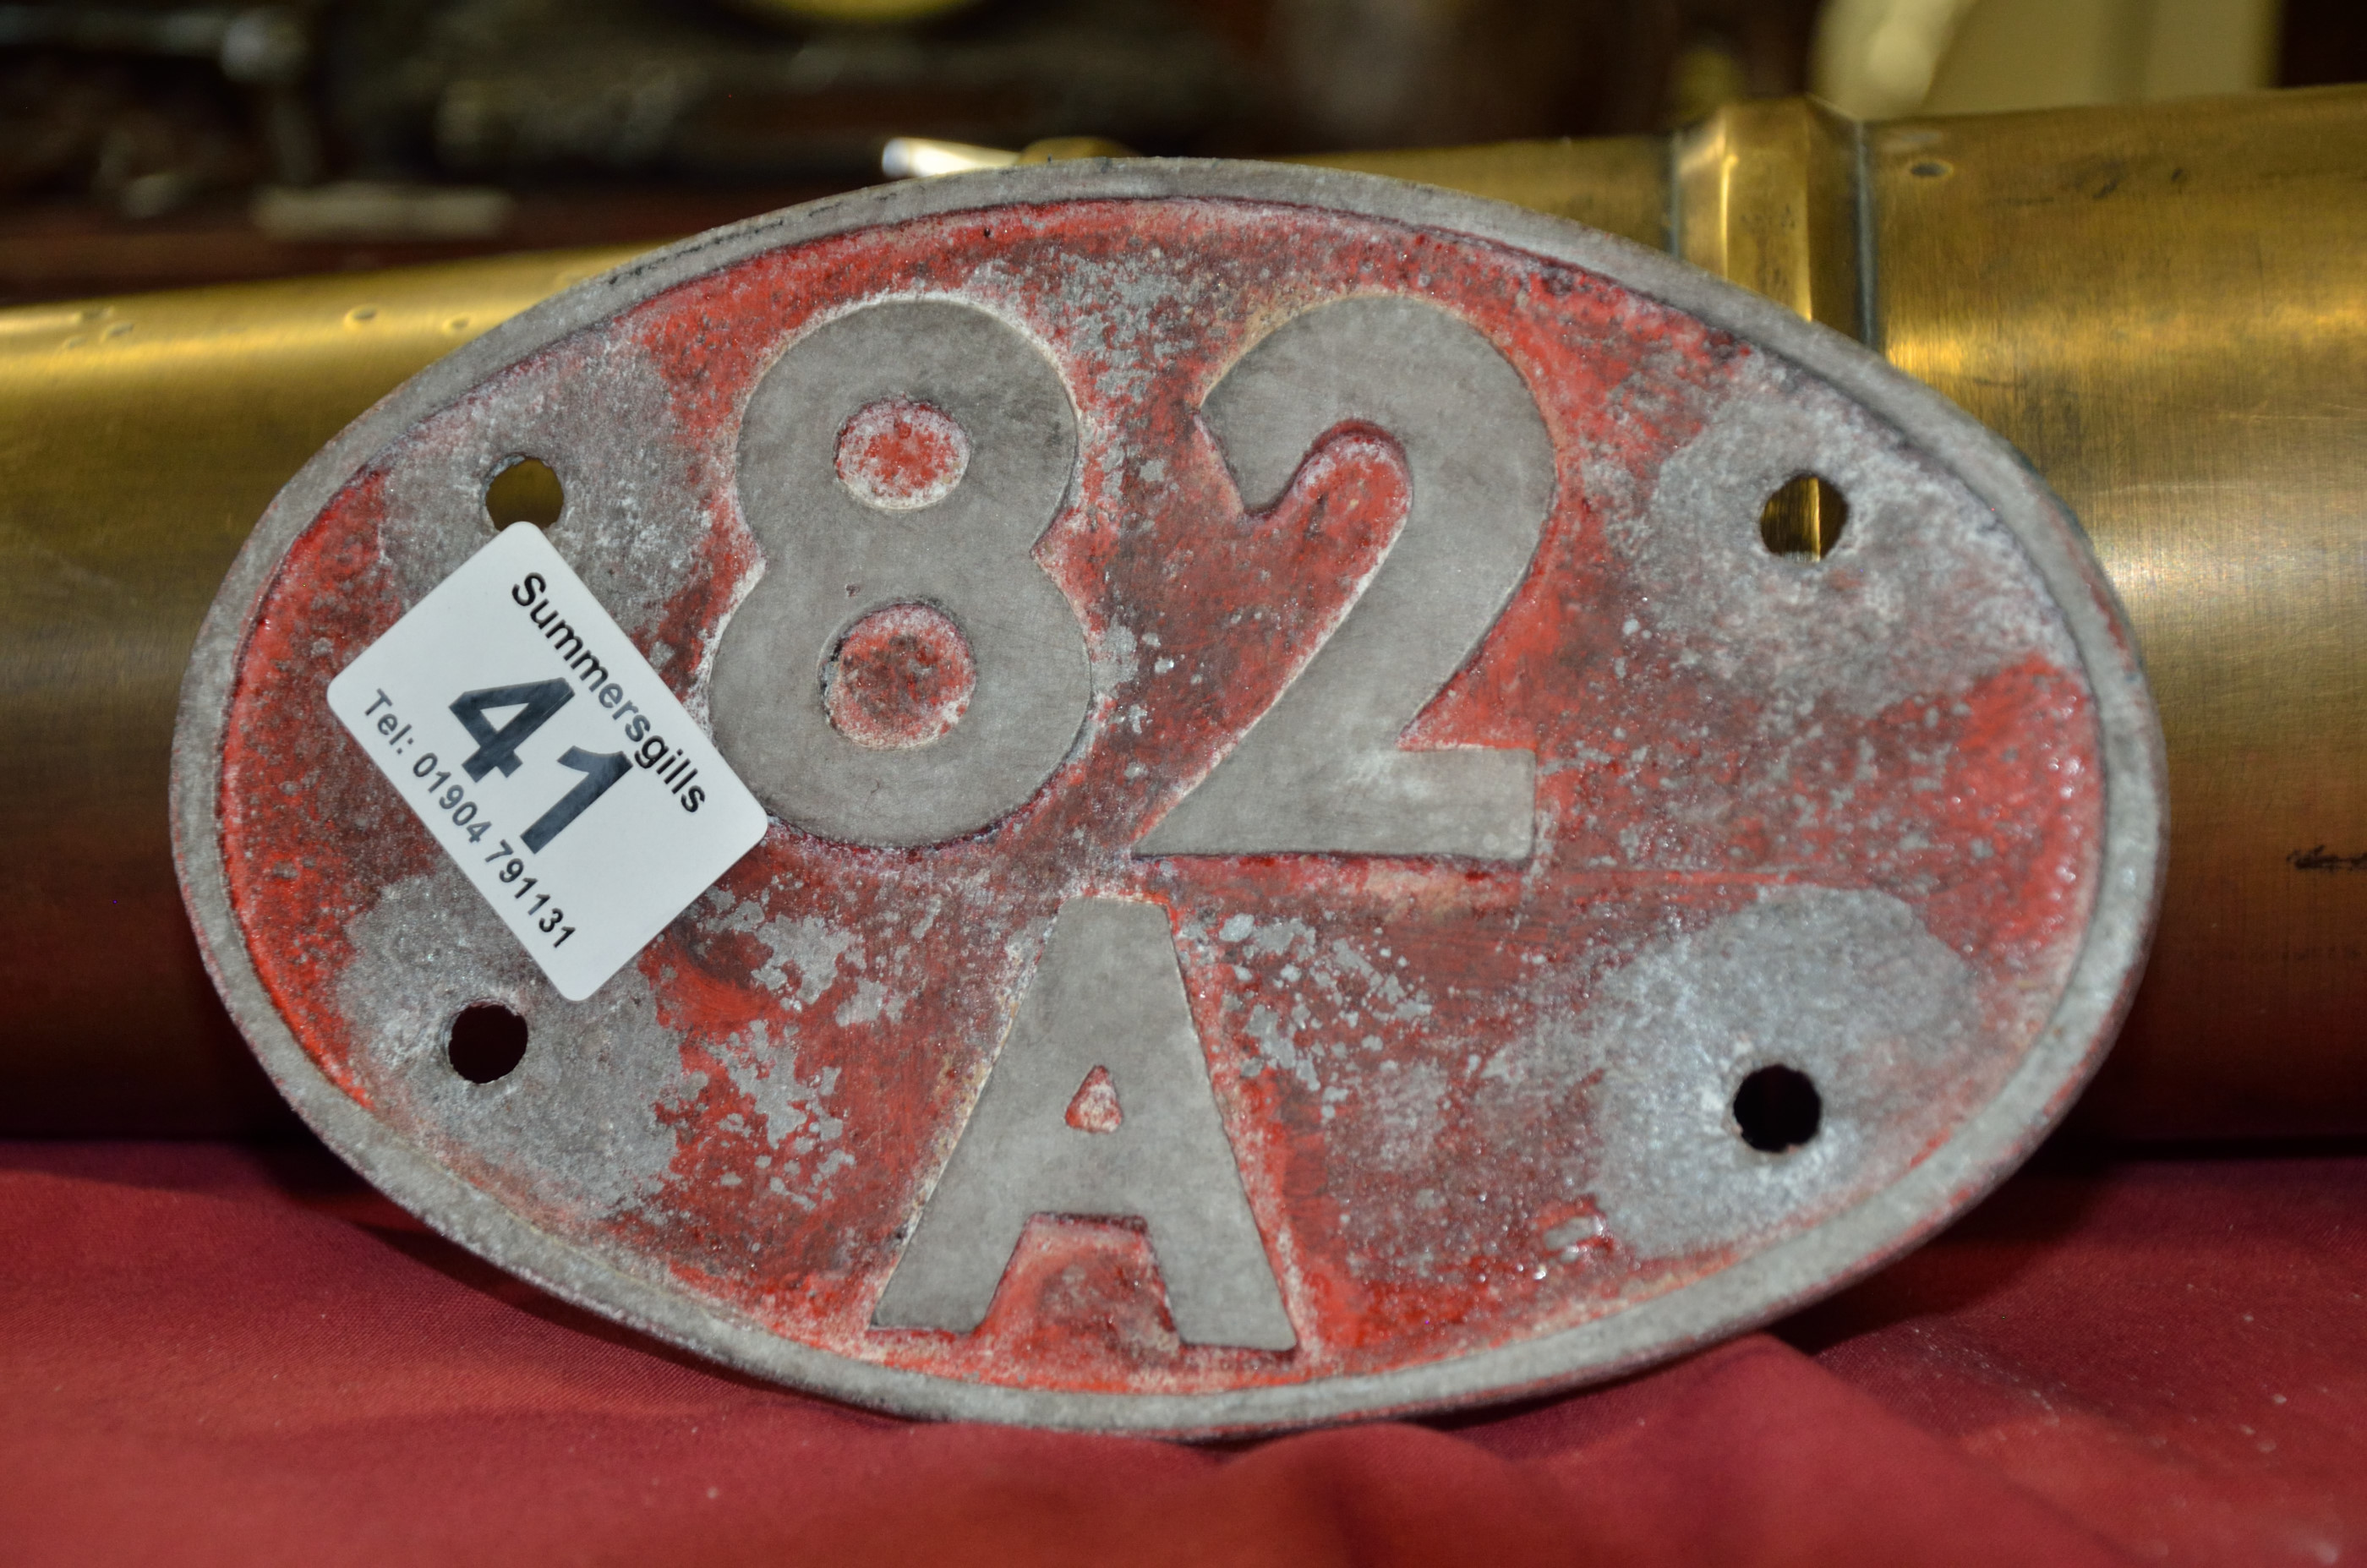 82A' Oval Railway sign